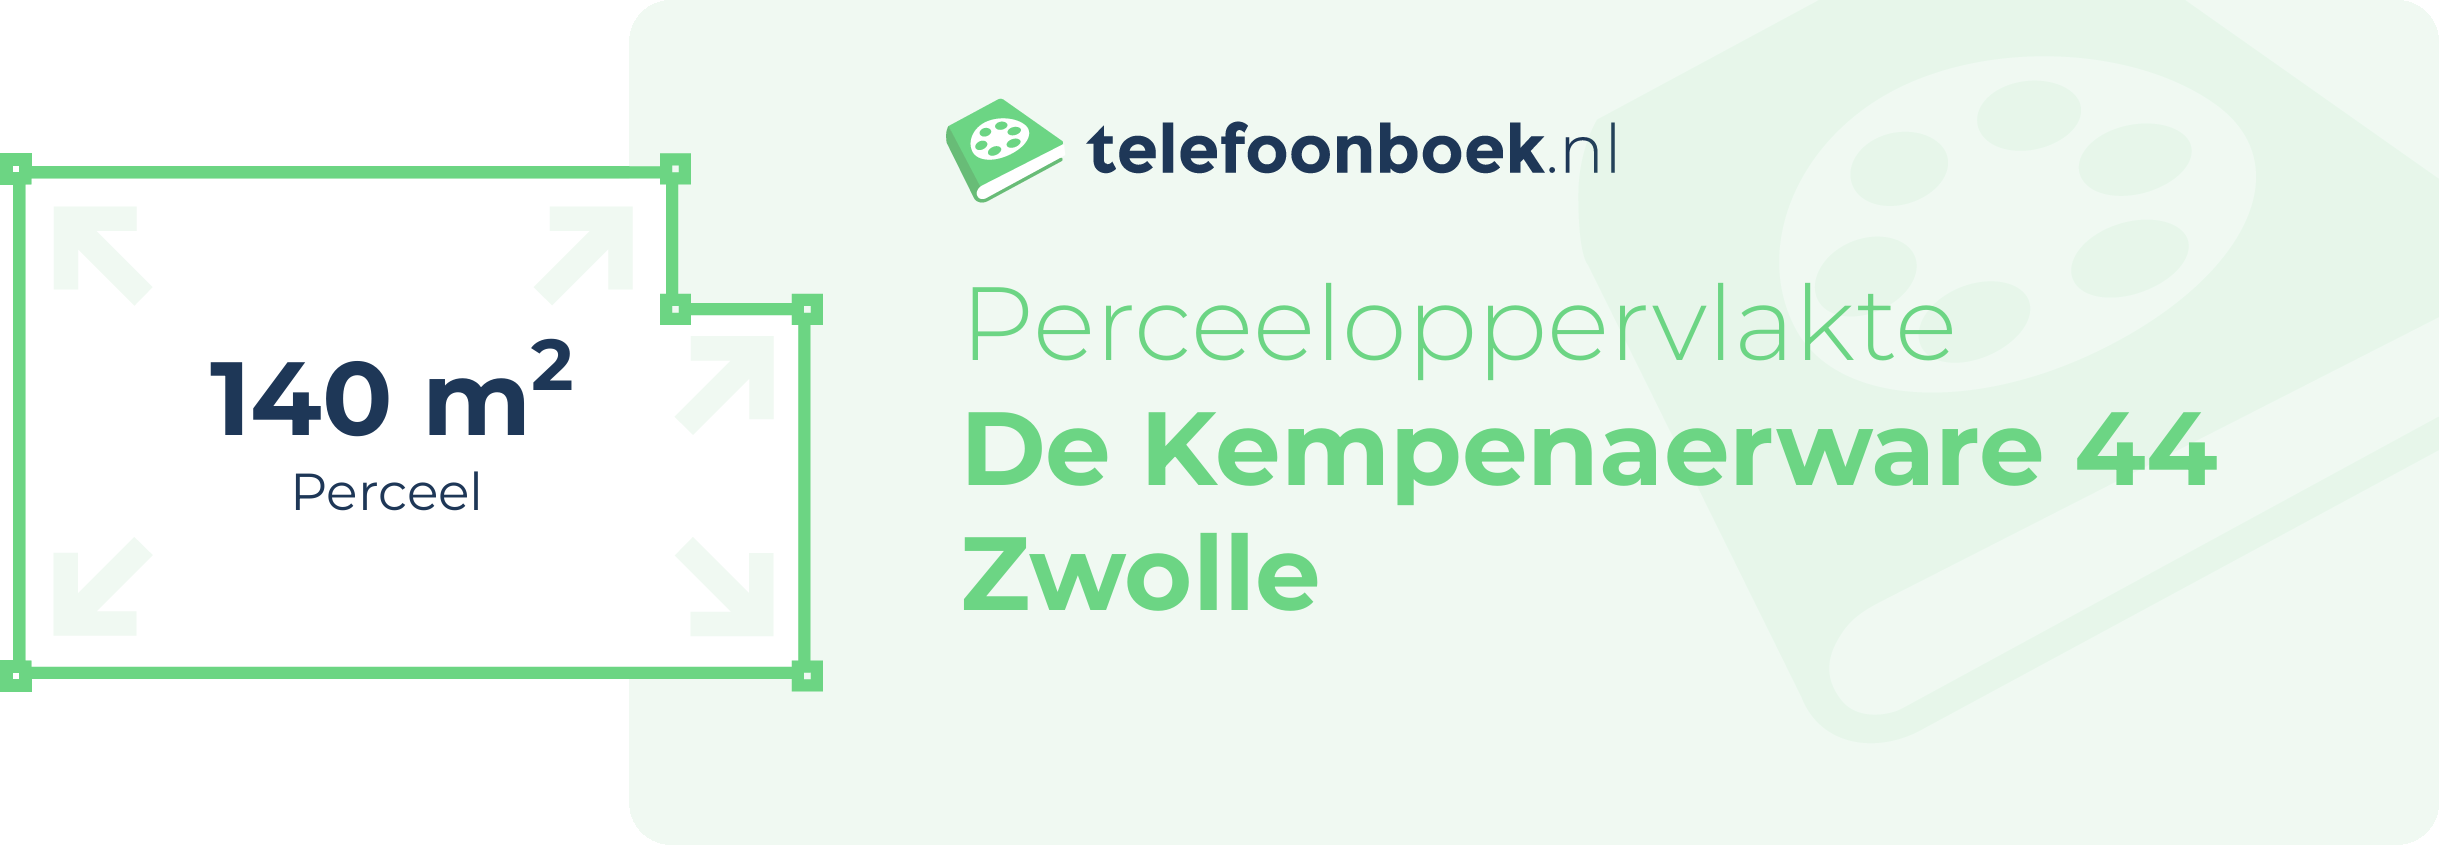 Perceeloppervlakte De Kempenaerware 44 Zwolle